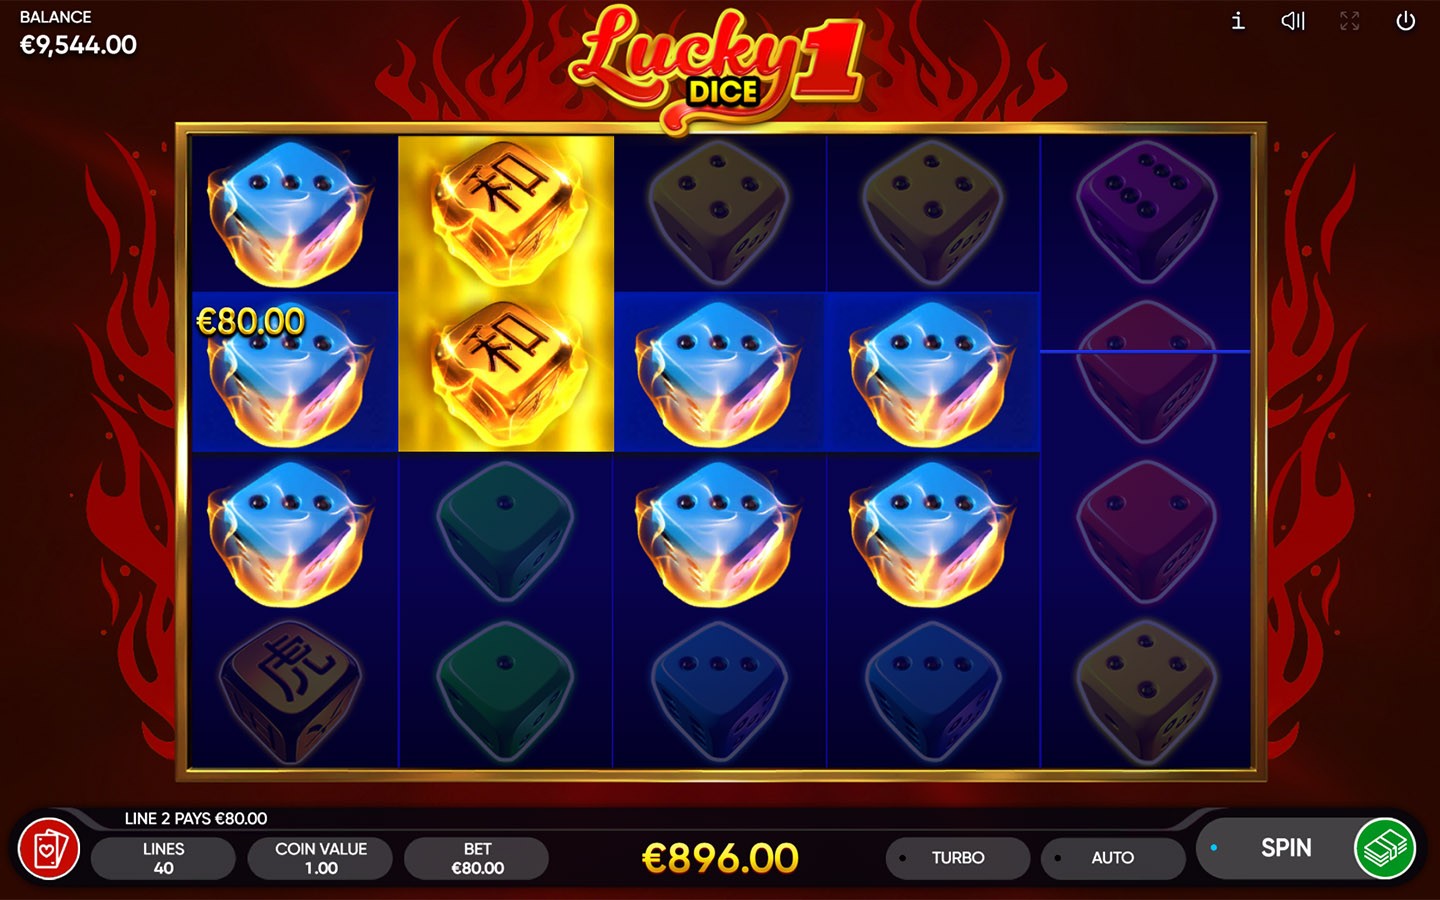 Premium Dice Slots | Enjoy Lucky Dice 1 slot for free!